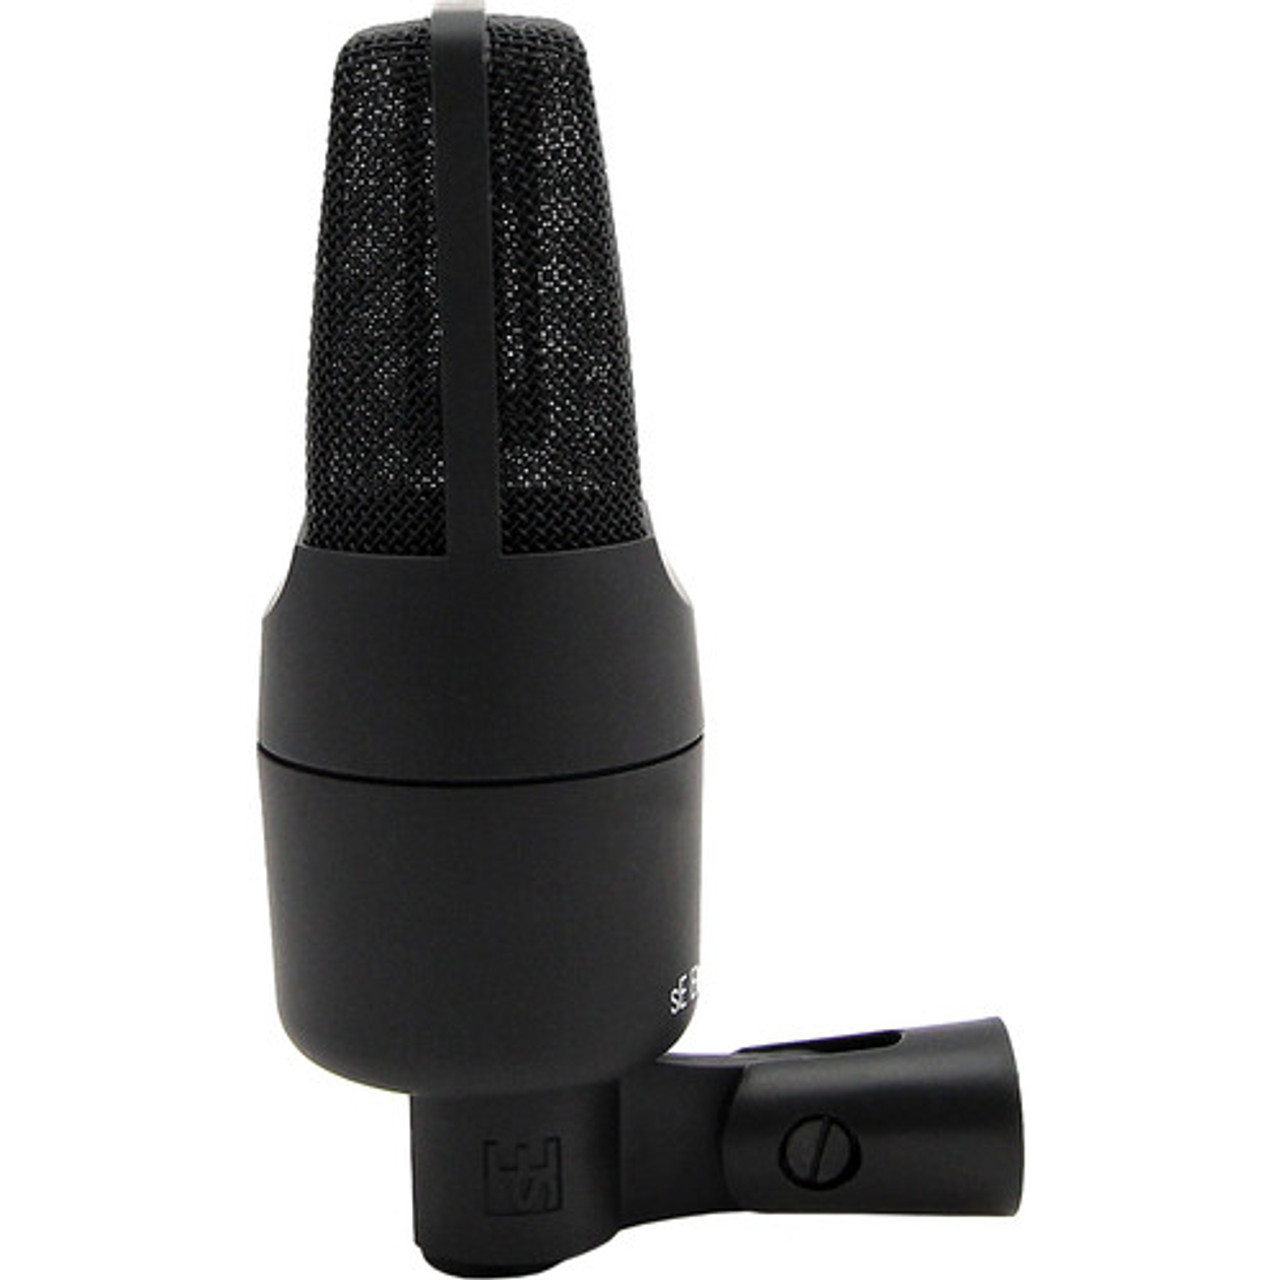 sE Electronics X1 R X1 Series Ribbon Microphone and Clip (X1-R-U)